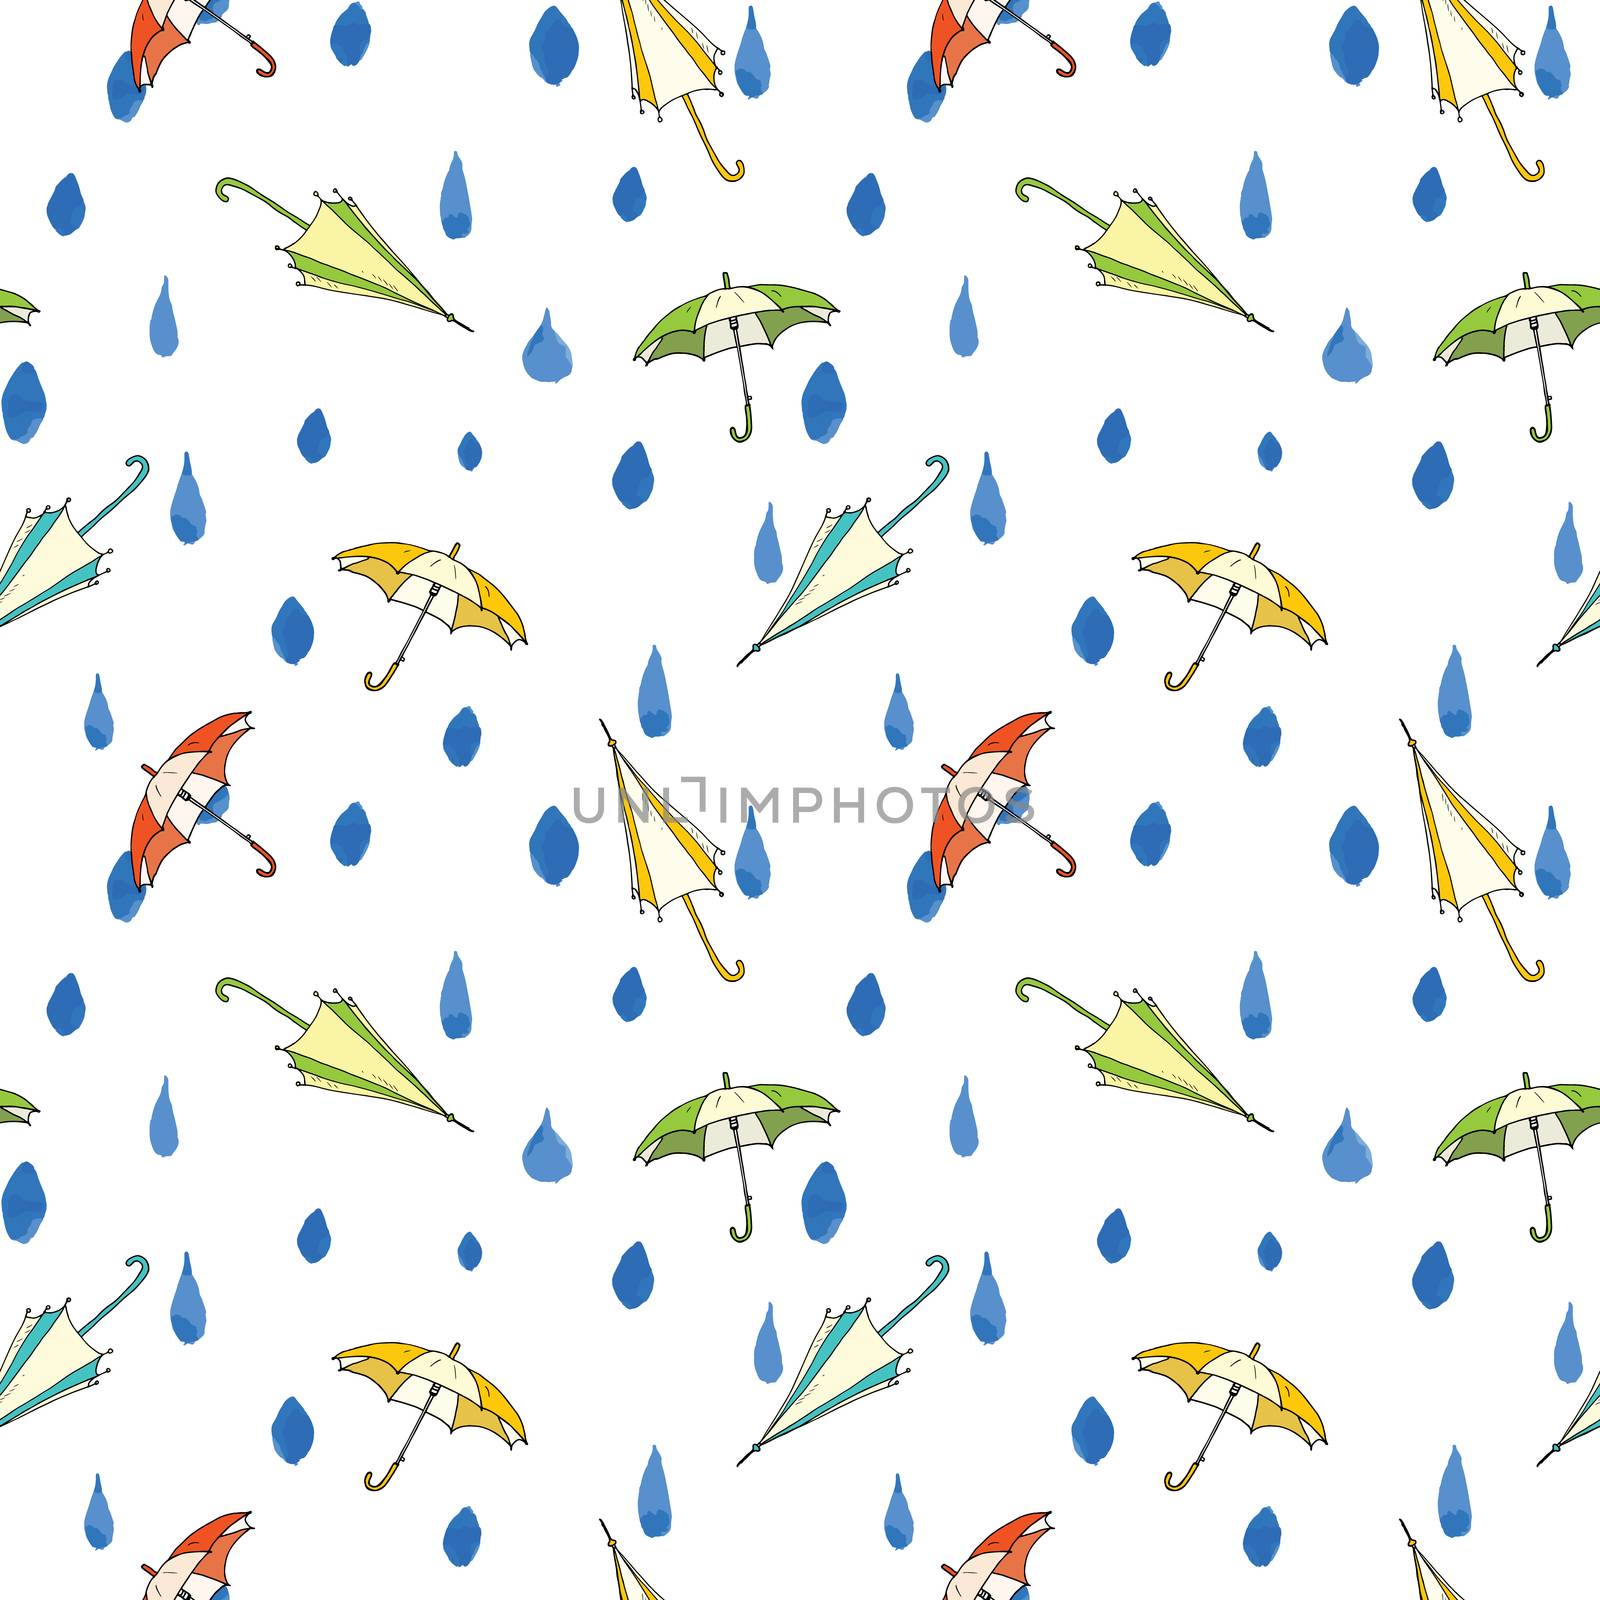 Rain drops and umbrella seamless pattern. Hand drawn vector illustration. by Lemon_workshop